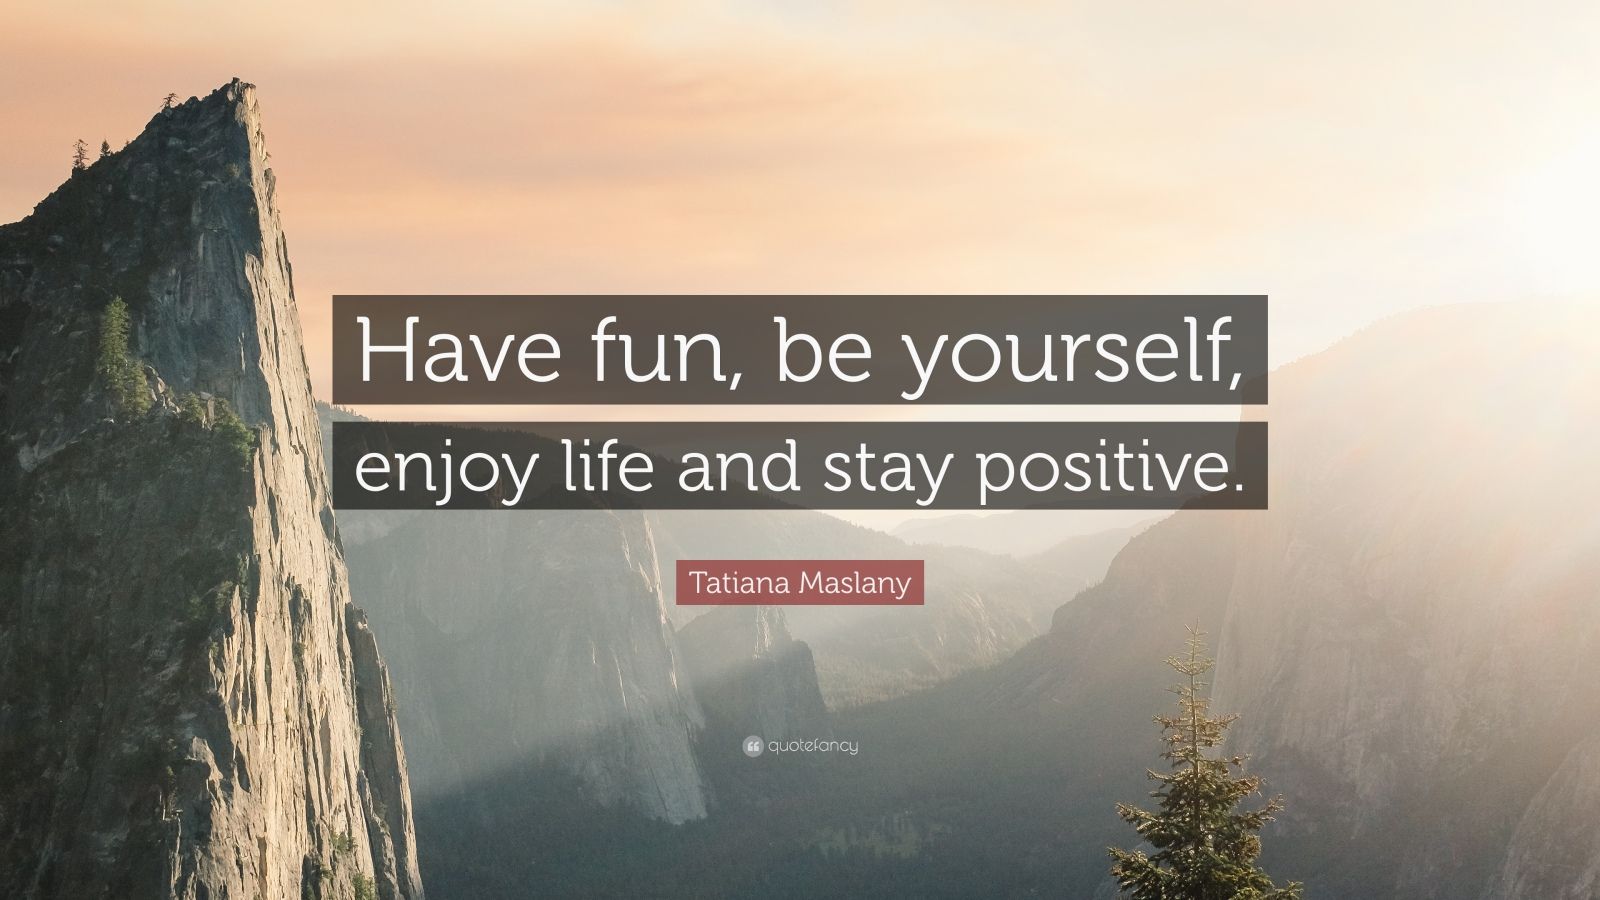 Tatiana Maslany Quote “Have fun, be yourself, enjoy life